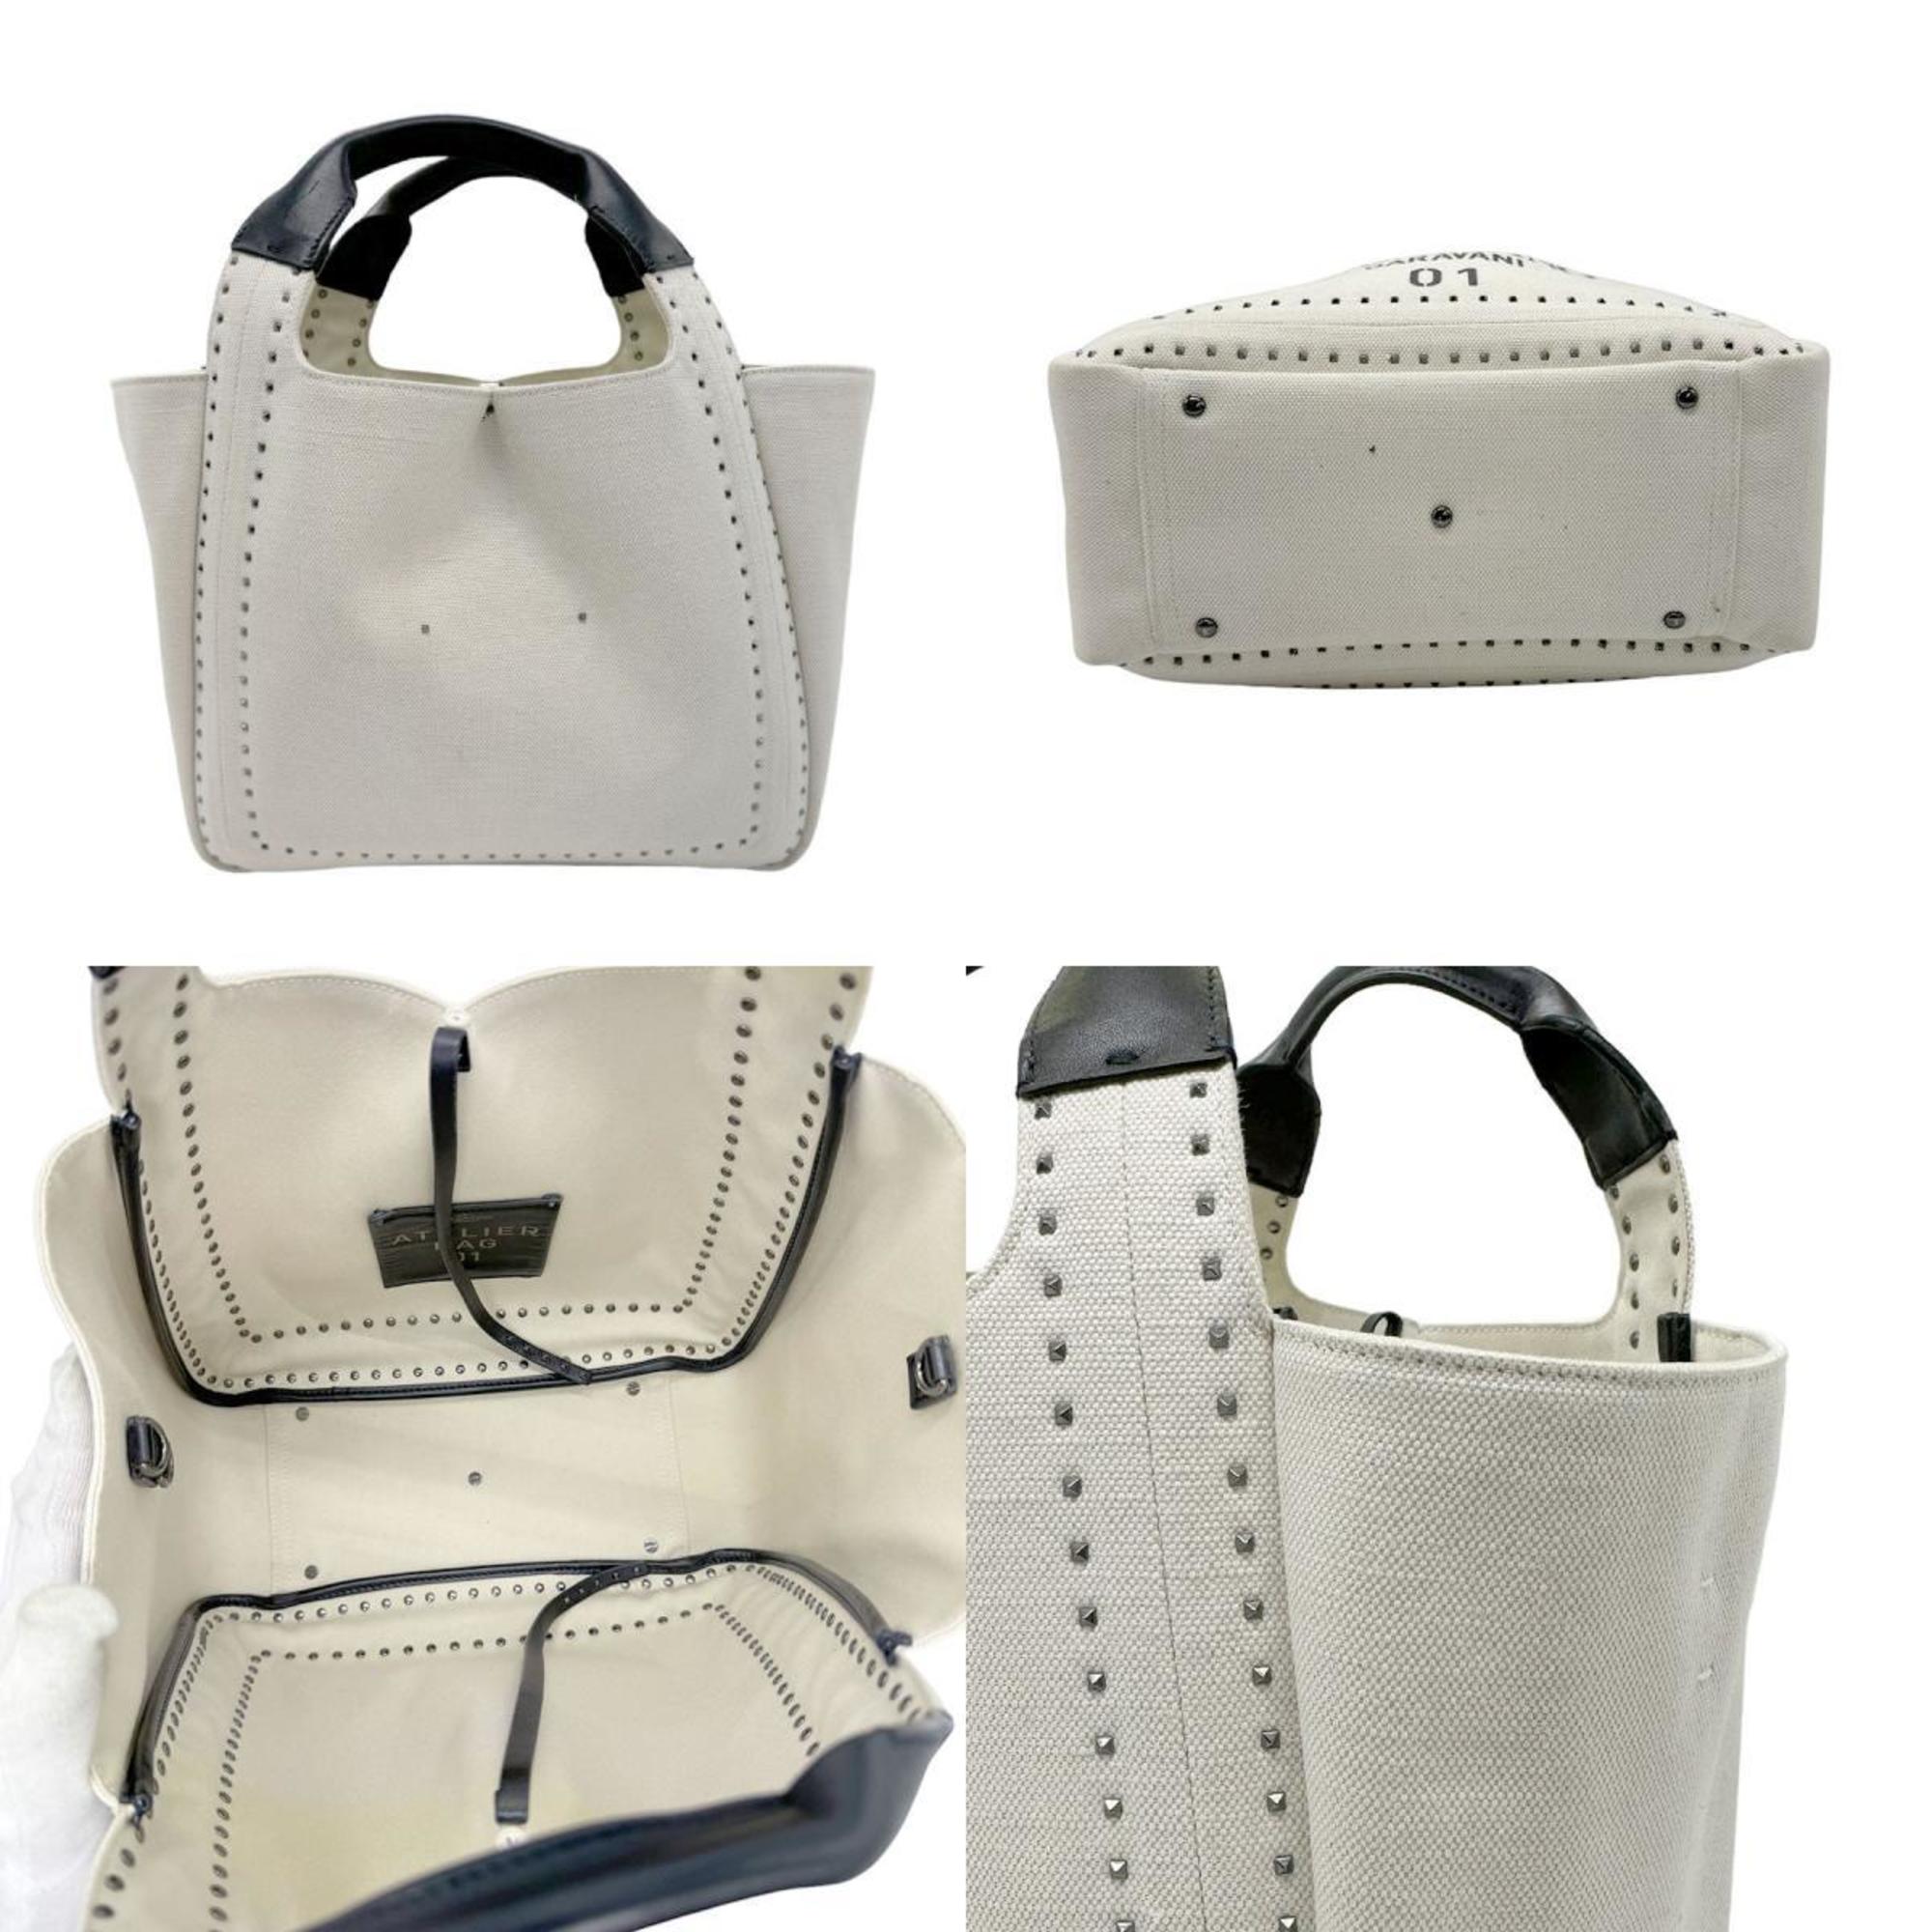 Valentino Garavani Handbag Shoulder Bag Canvas/Leather Ivory x Black Women's z0700